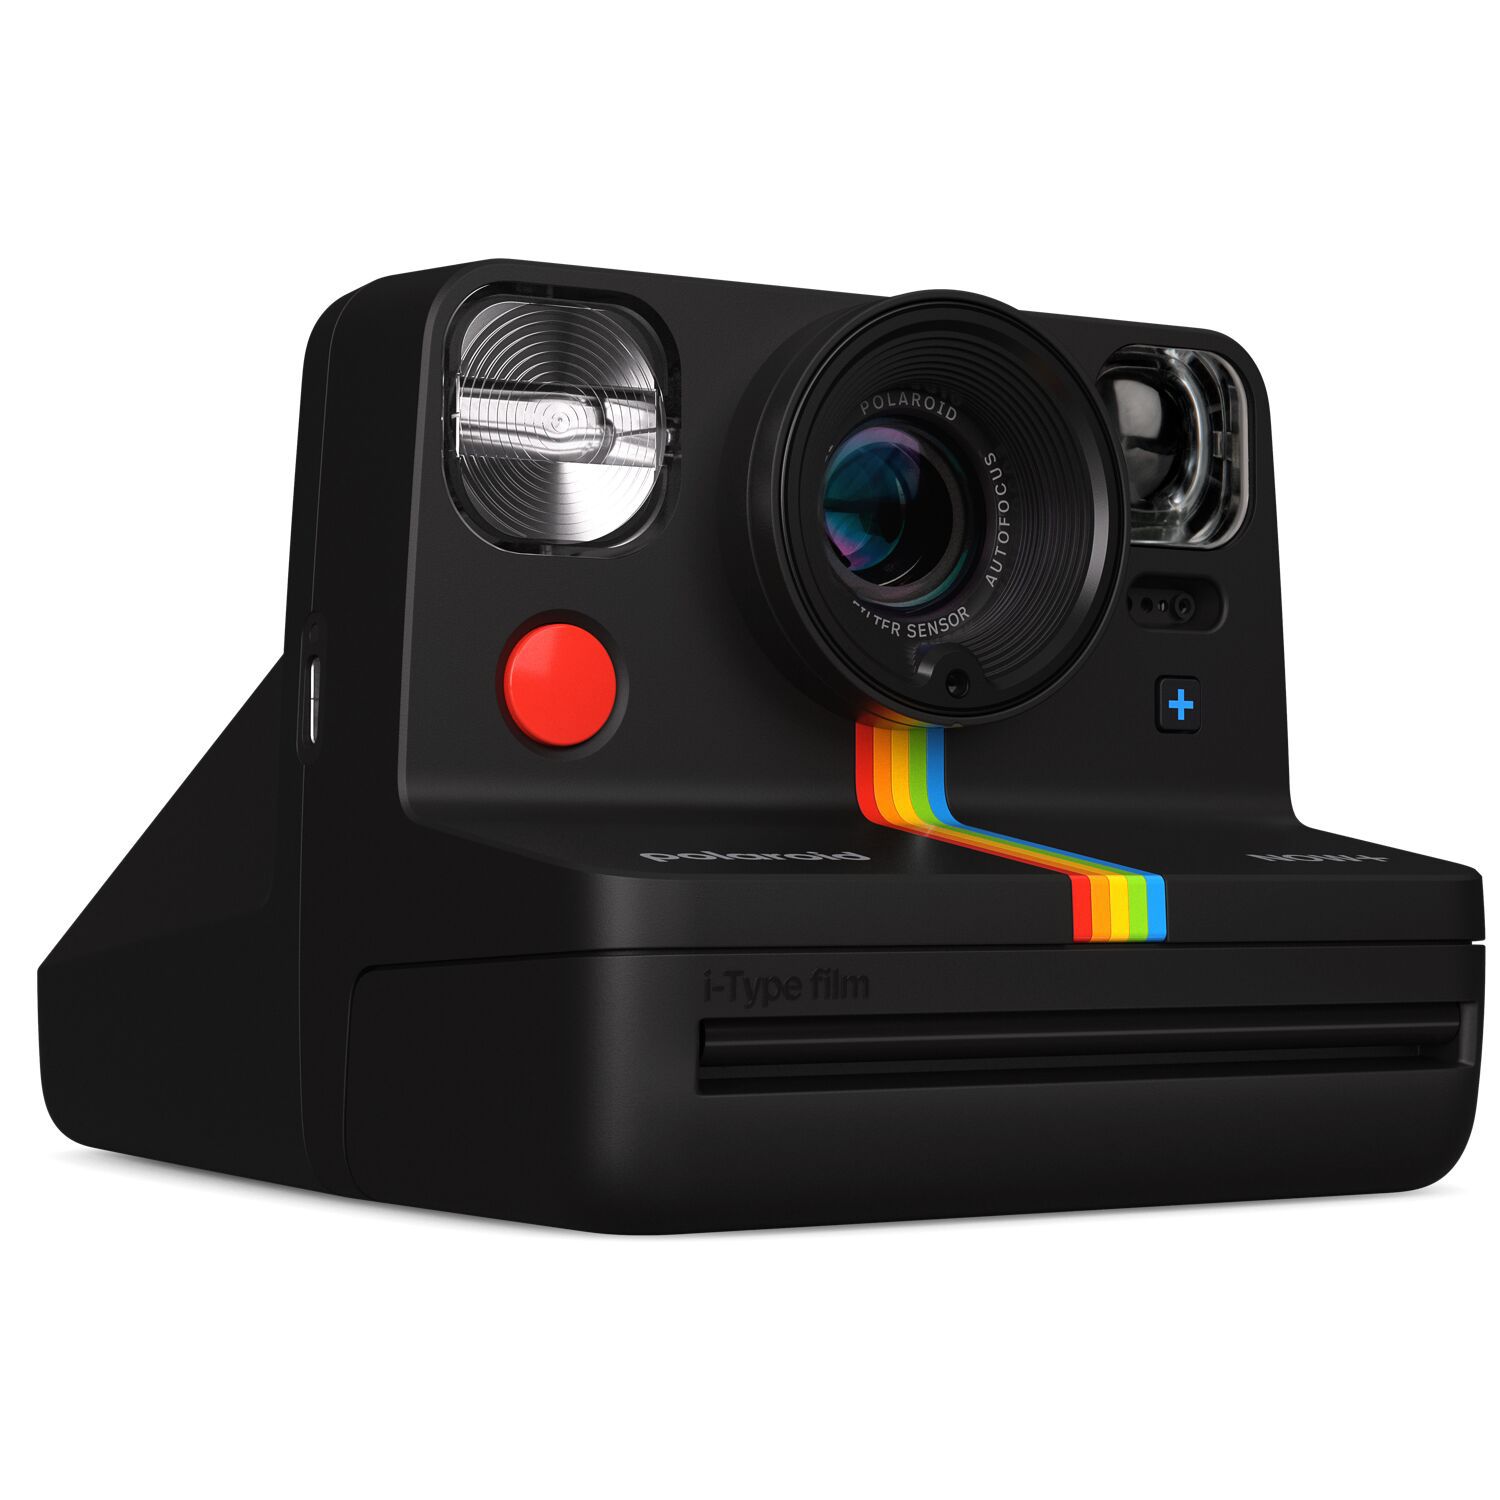 Polaroid Now+ Generation 2 Instant Camera White